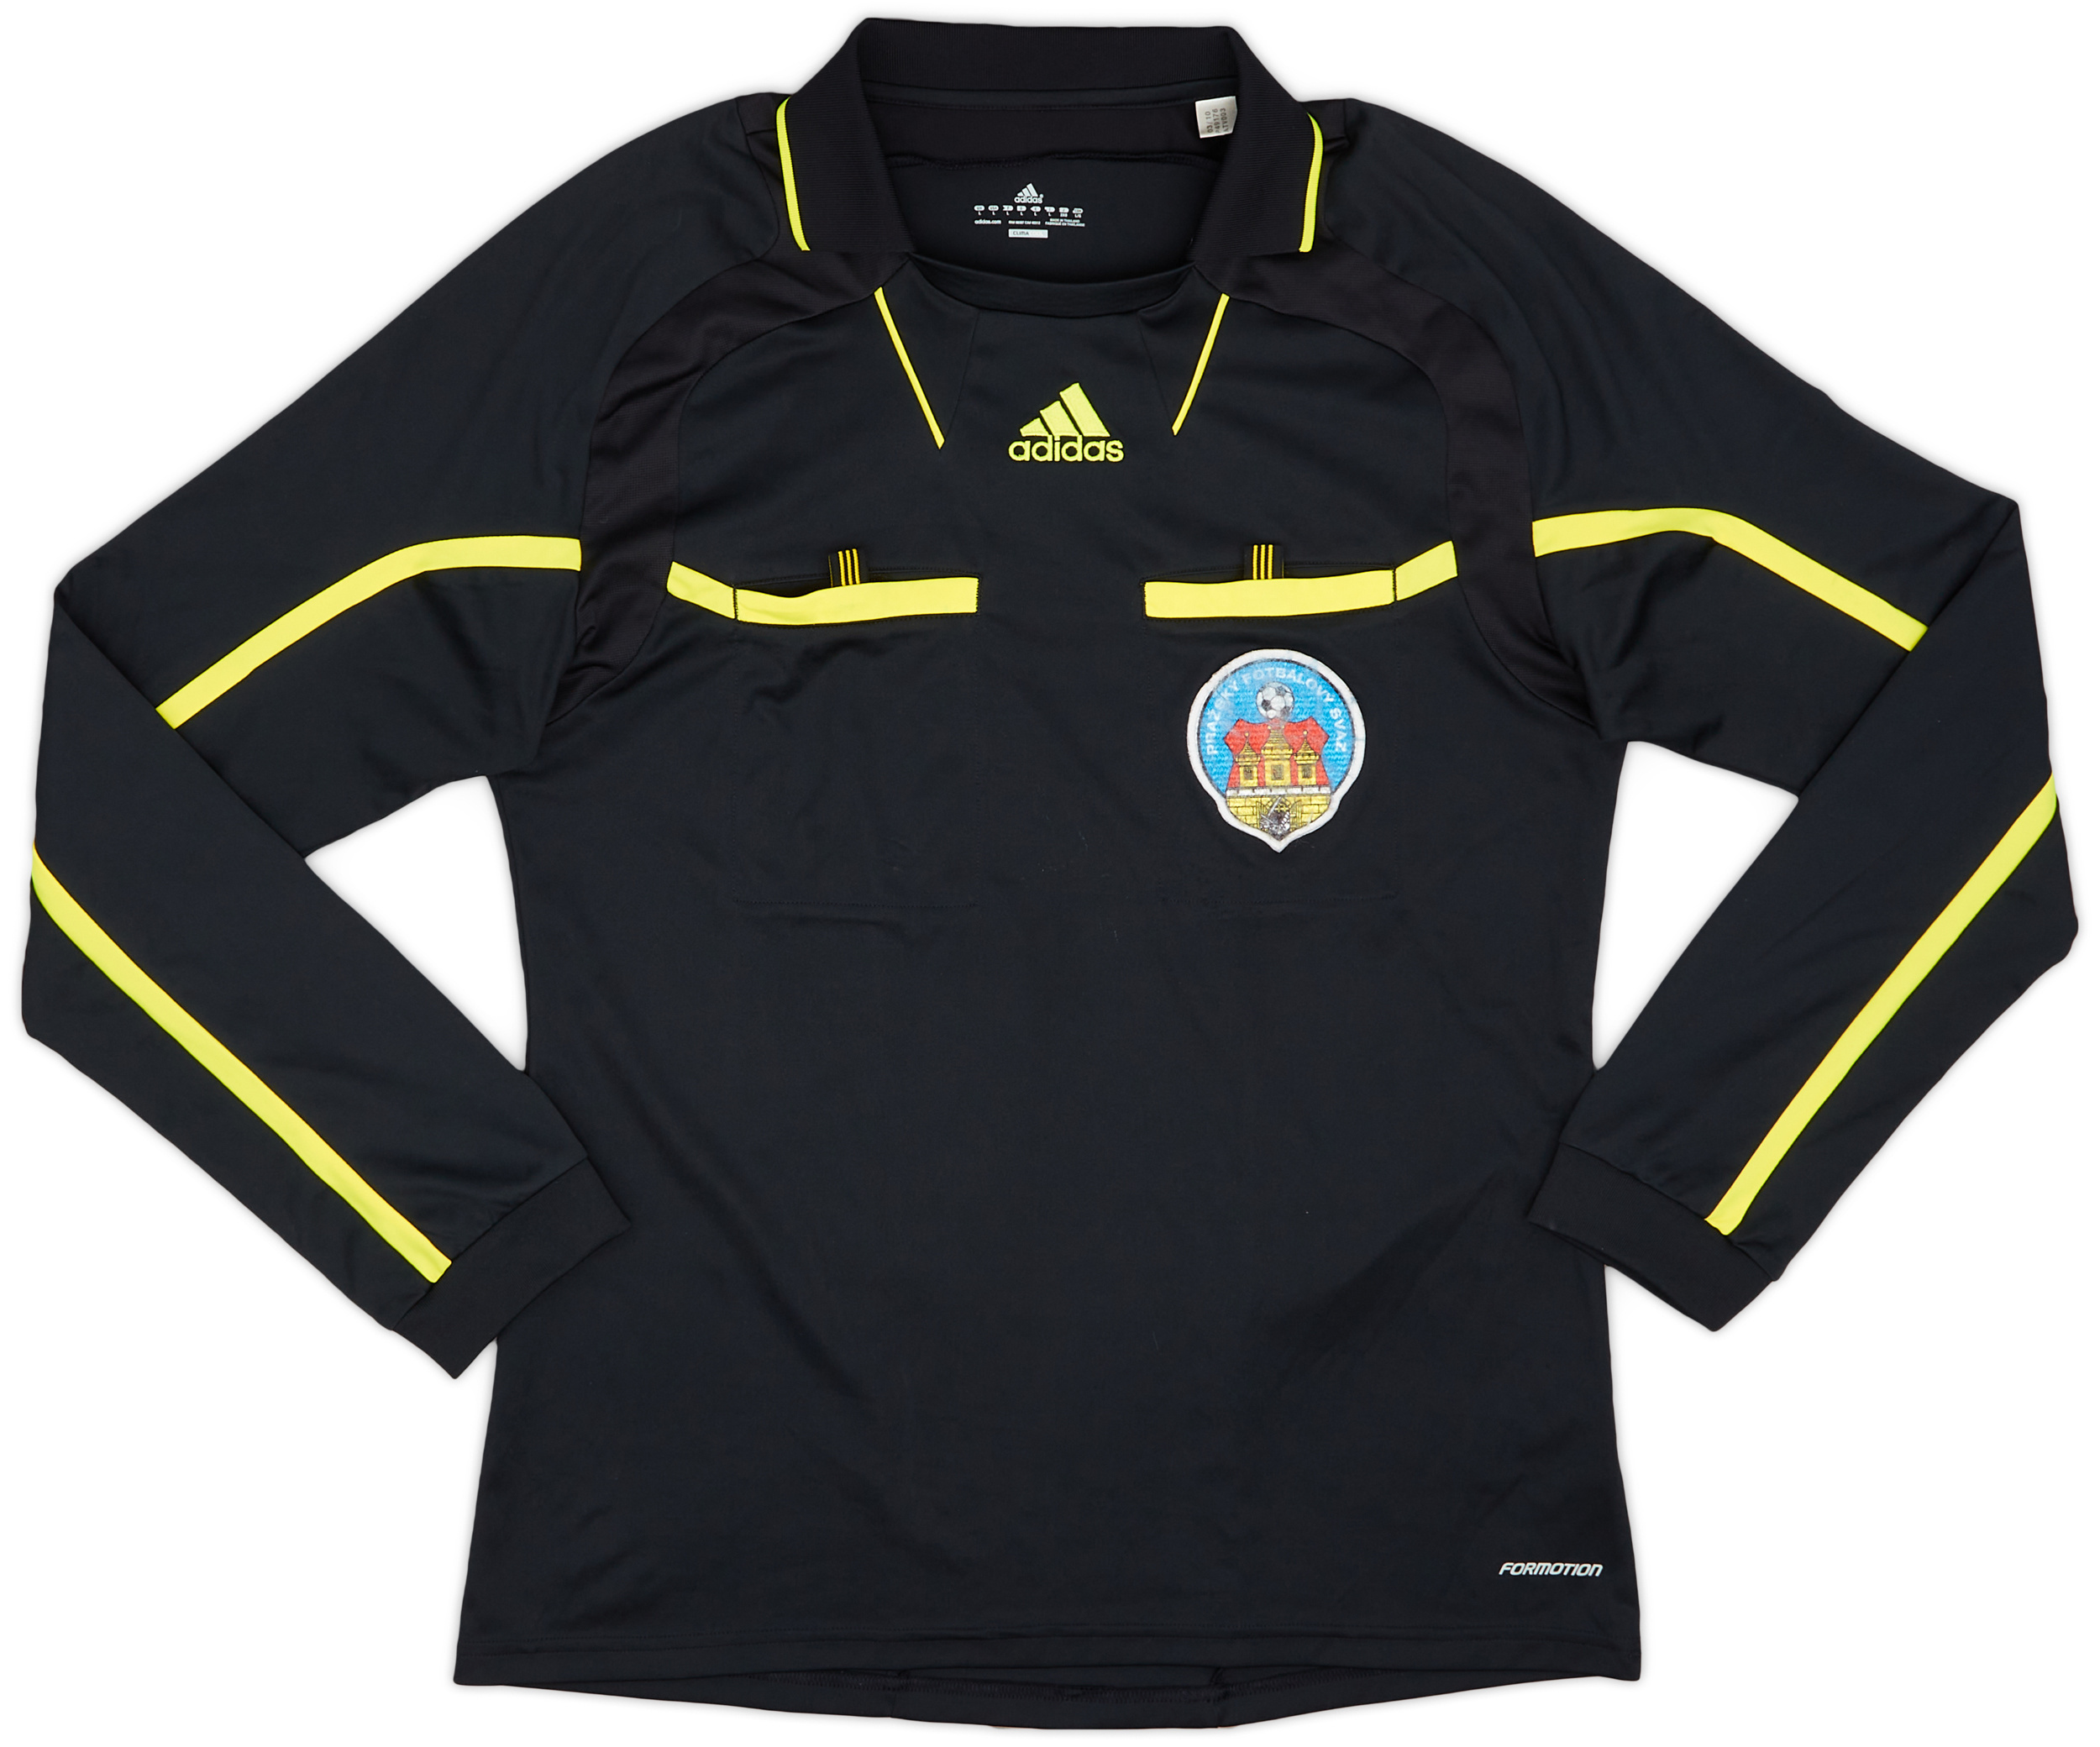 2010-11 Czech Republic adidas Referee Shirt - 5/10 - ()